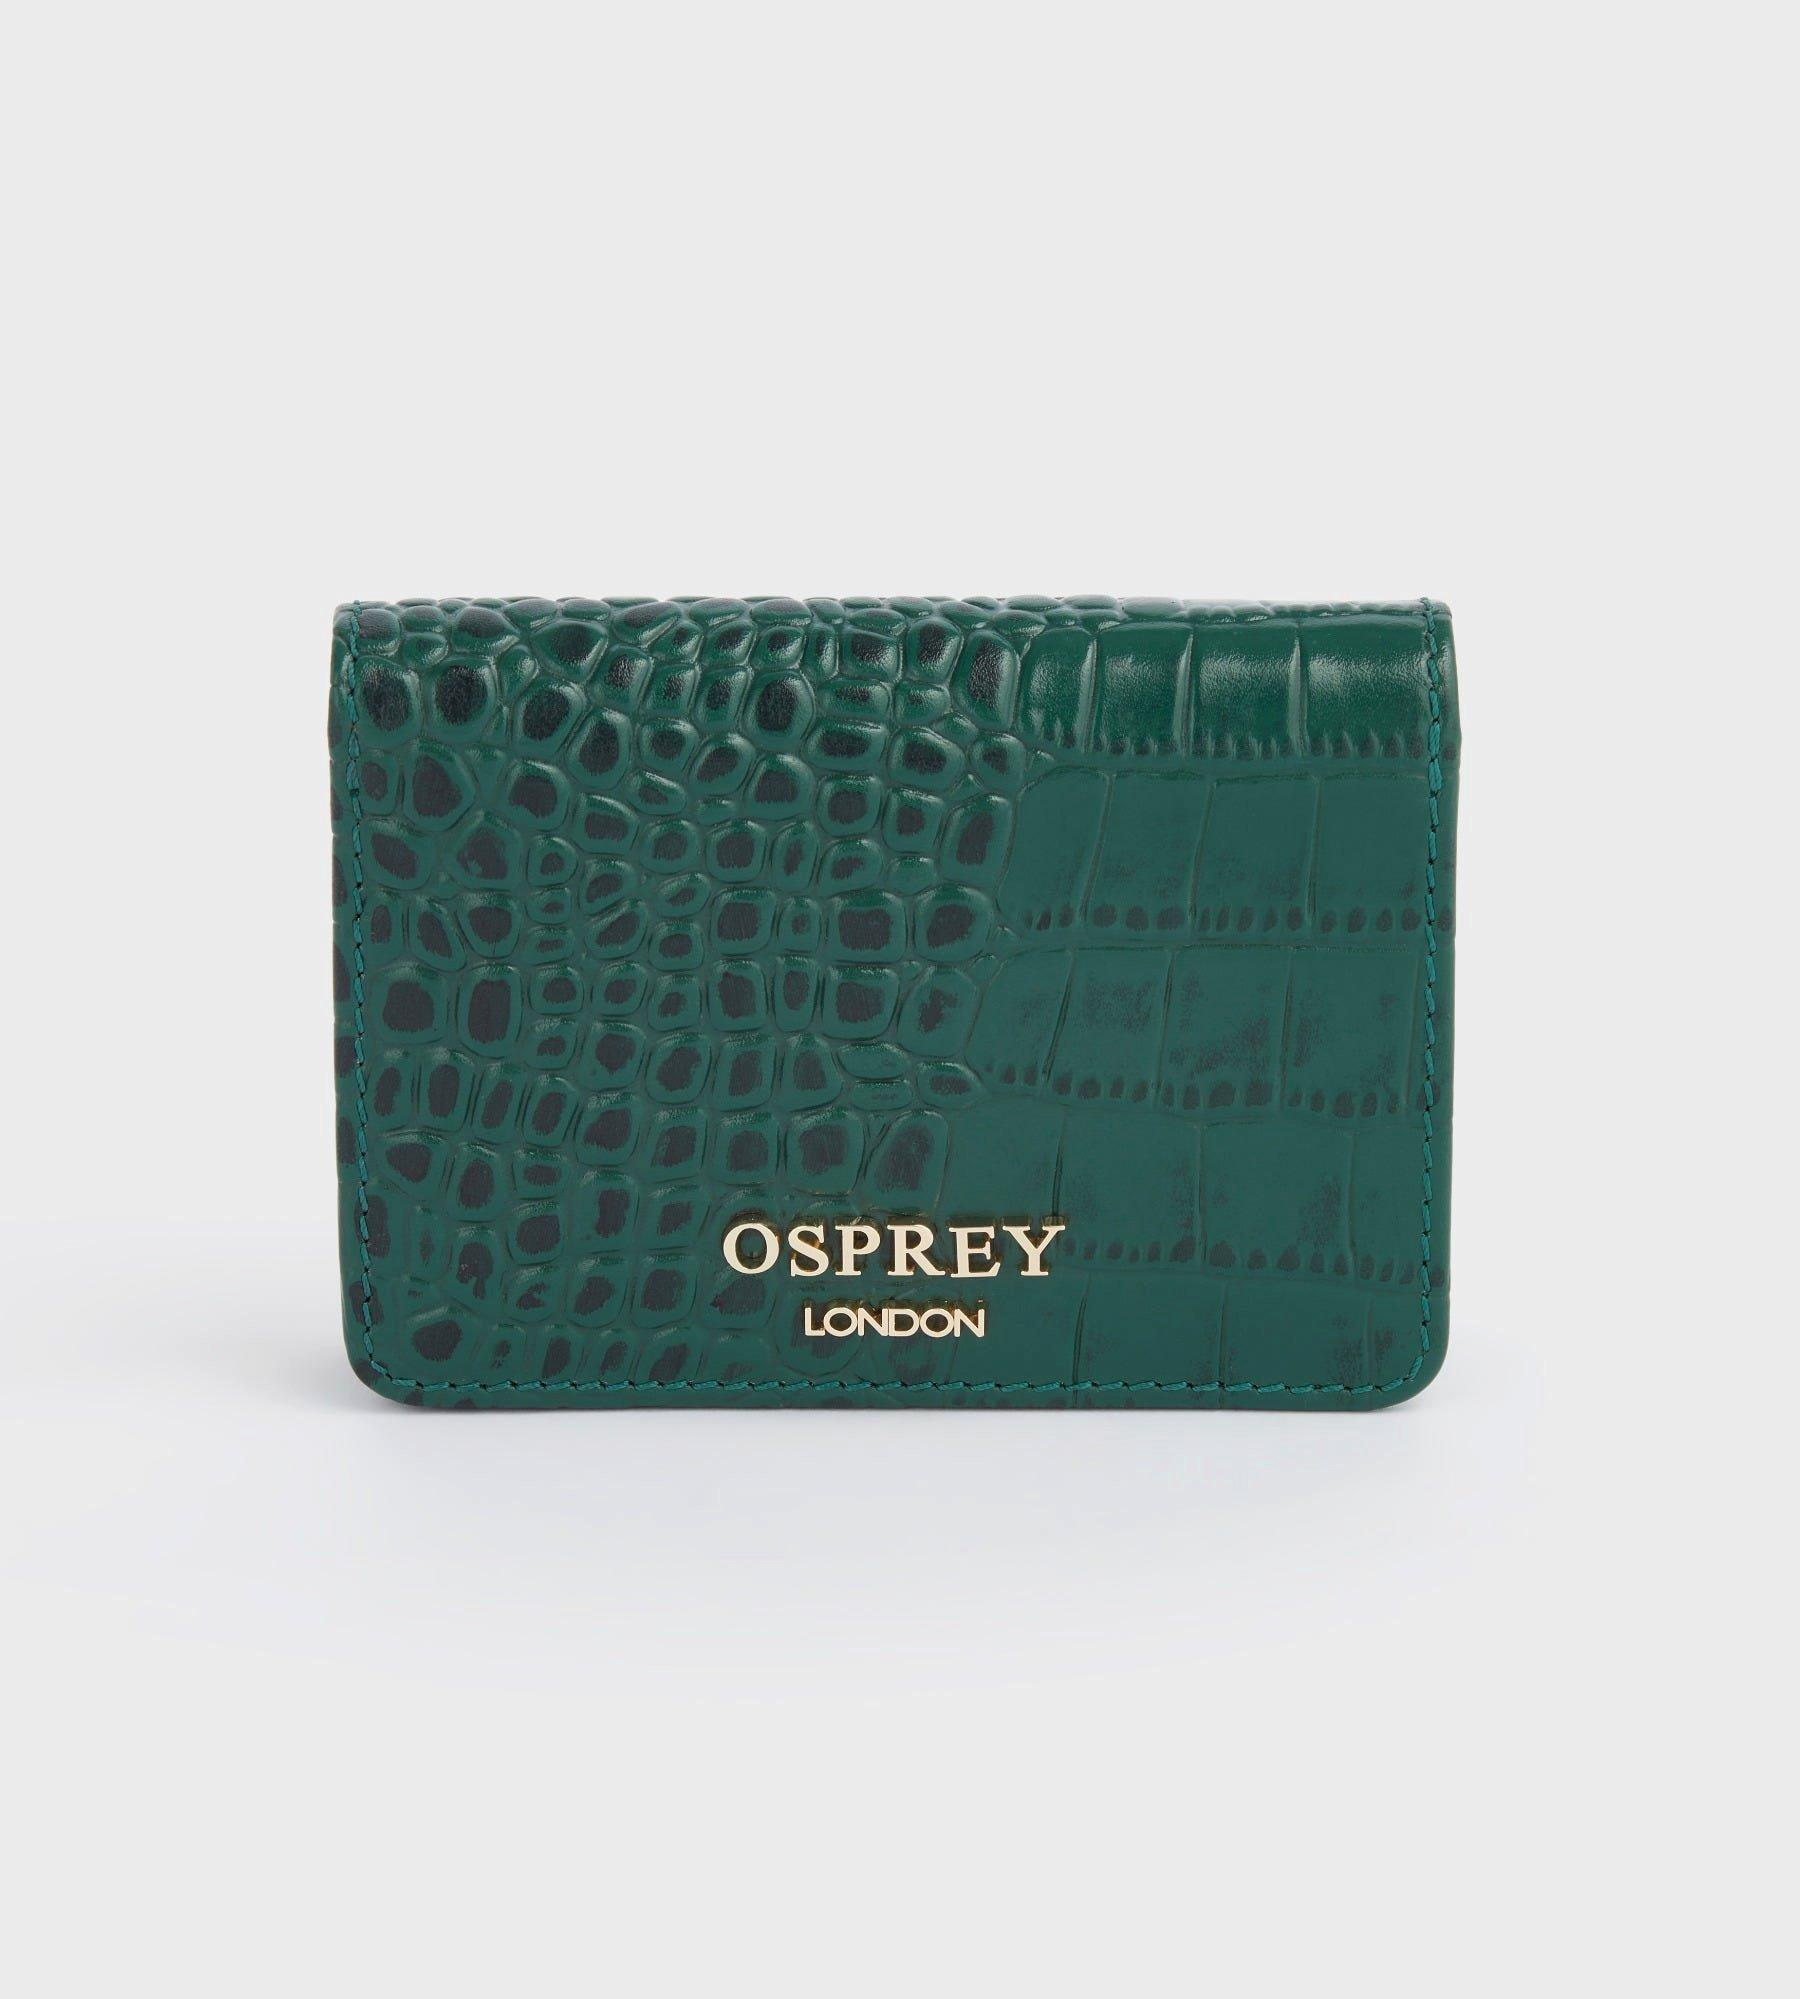 Osprey London or Radley London? : r/handbags